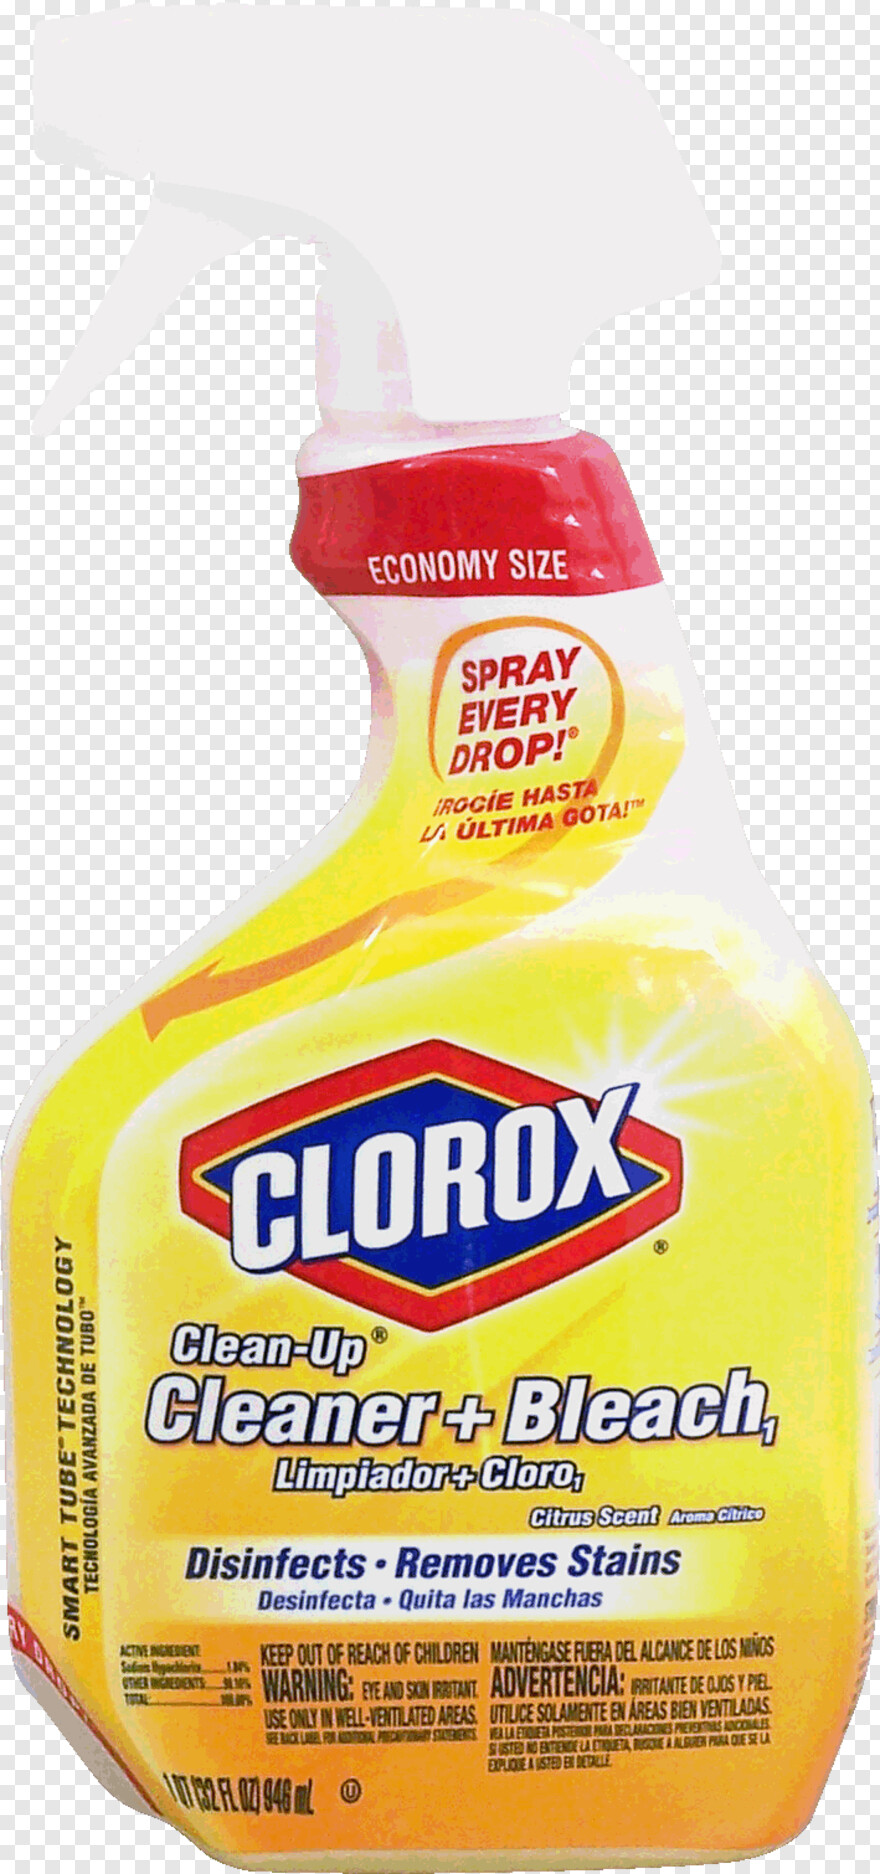 clorox-logo # 1009538